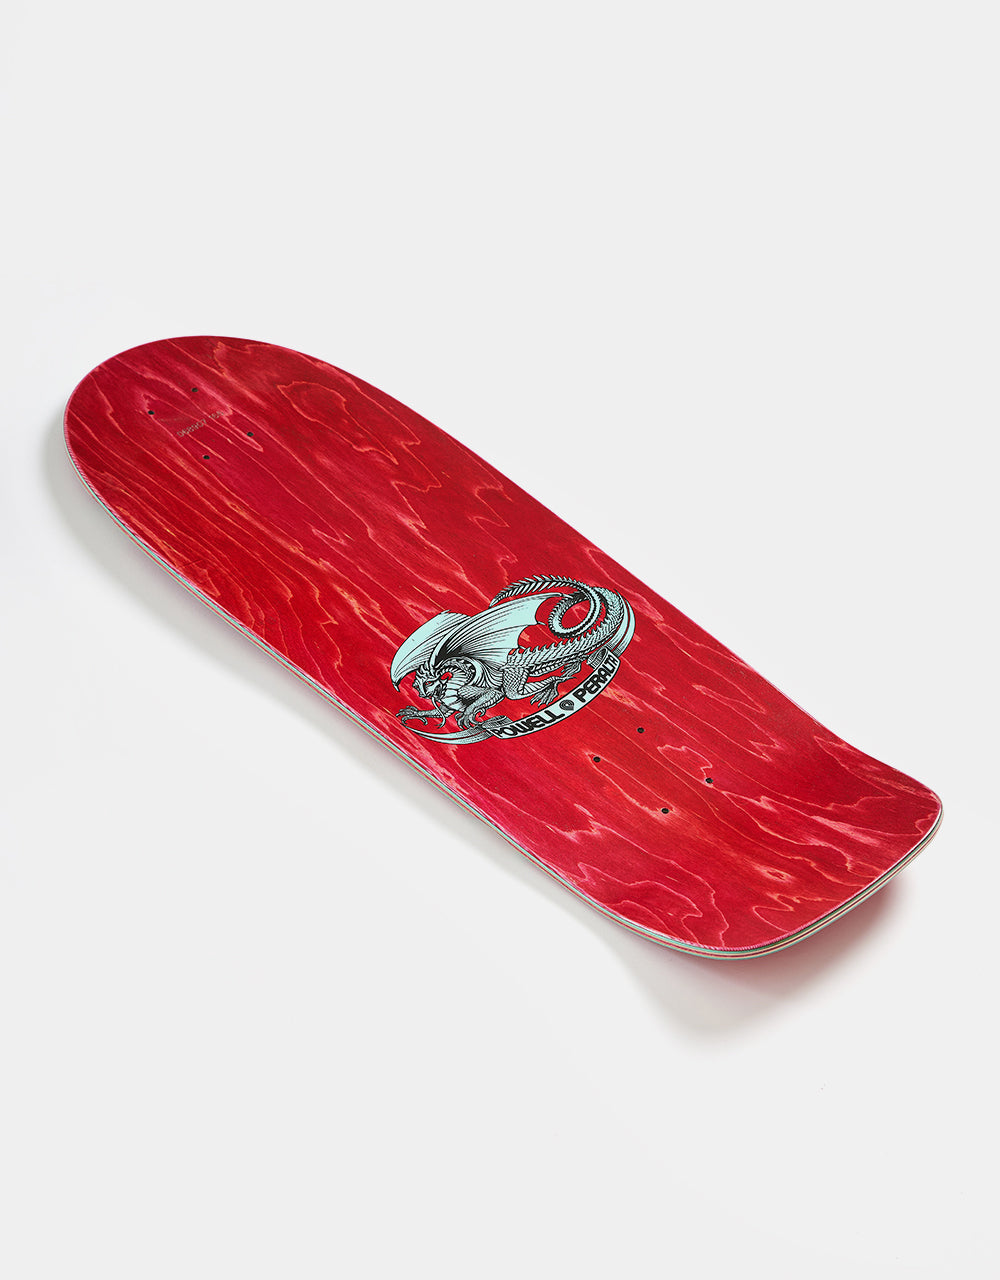 Powell Peralta Ray Rodriguez O.G. Skull & Sword '10' Skateboard Deck - 10"